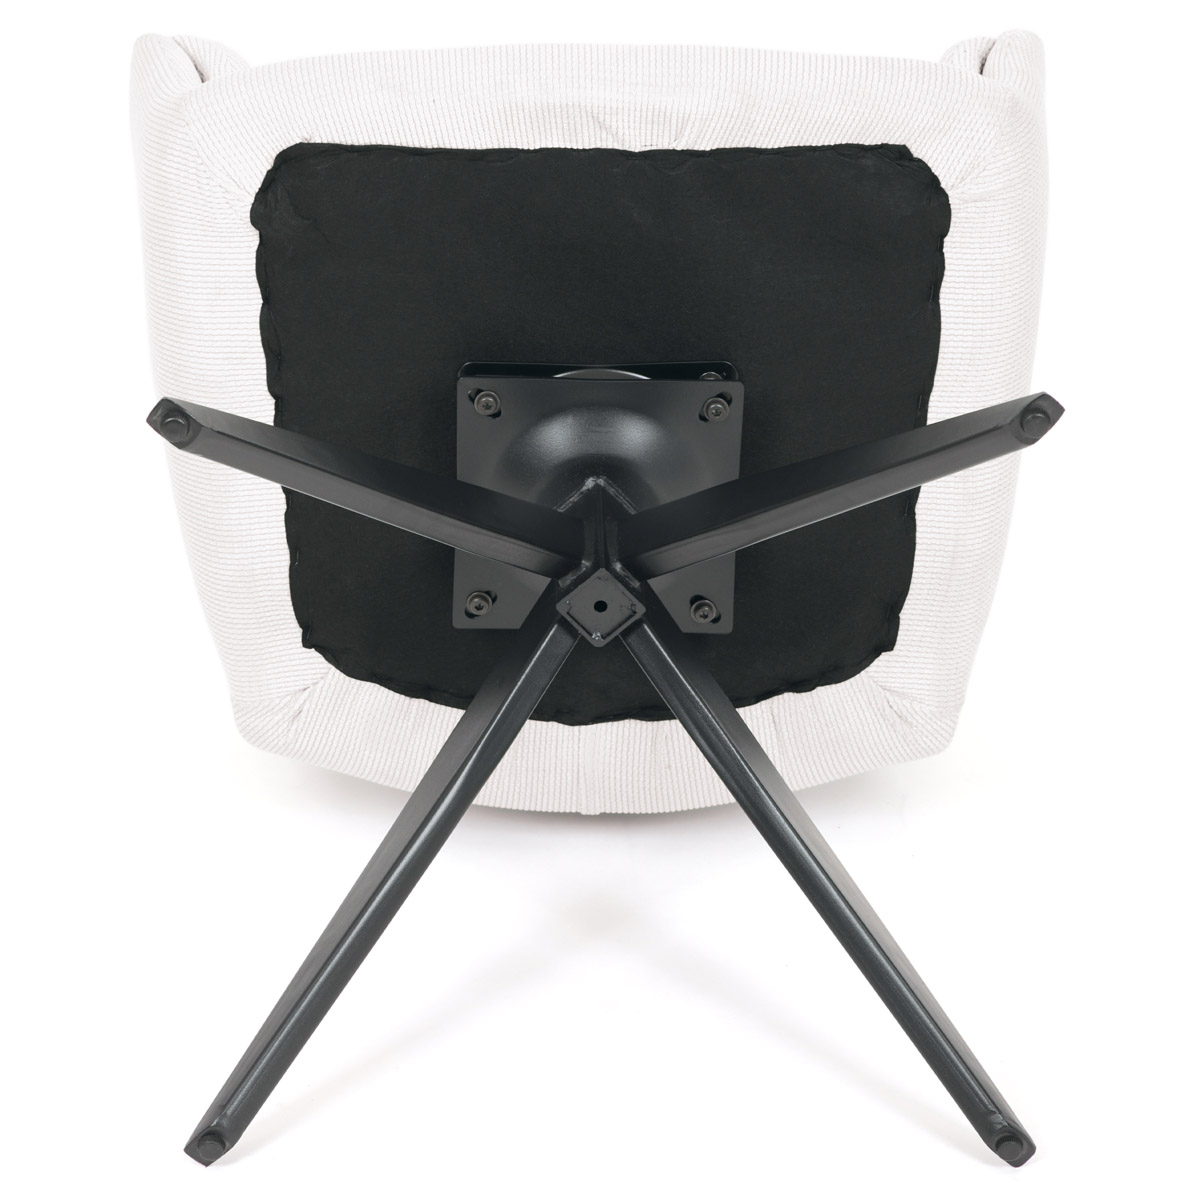 Židle jídelní, bílá látka, otočný mechanismus 180°, černý kov